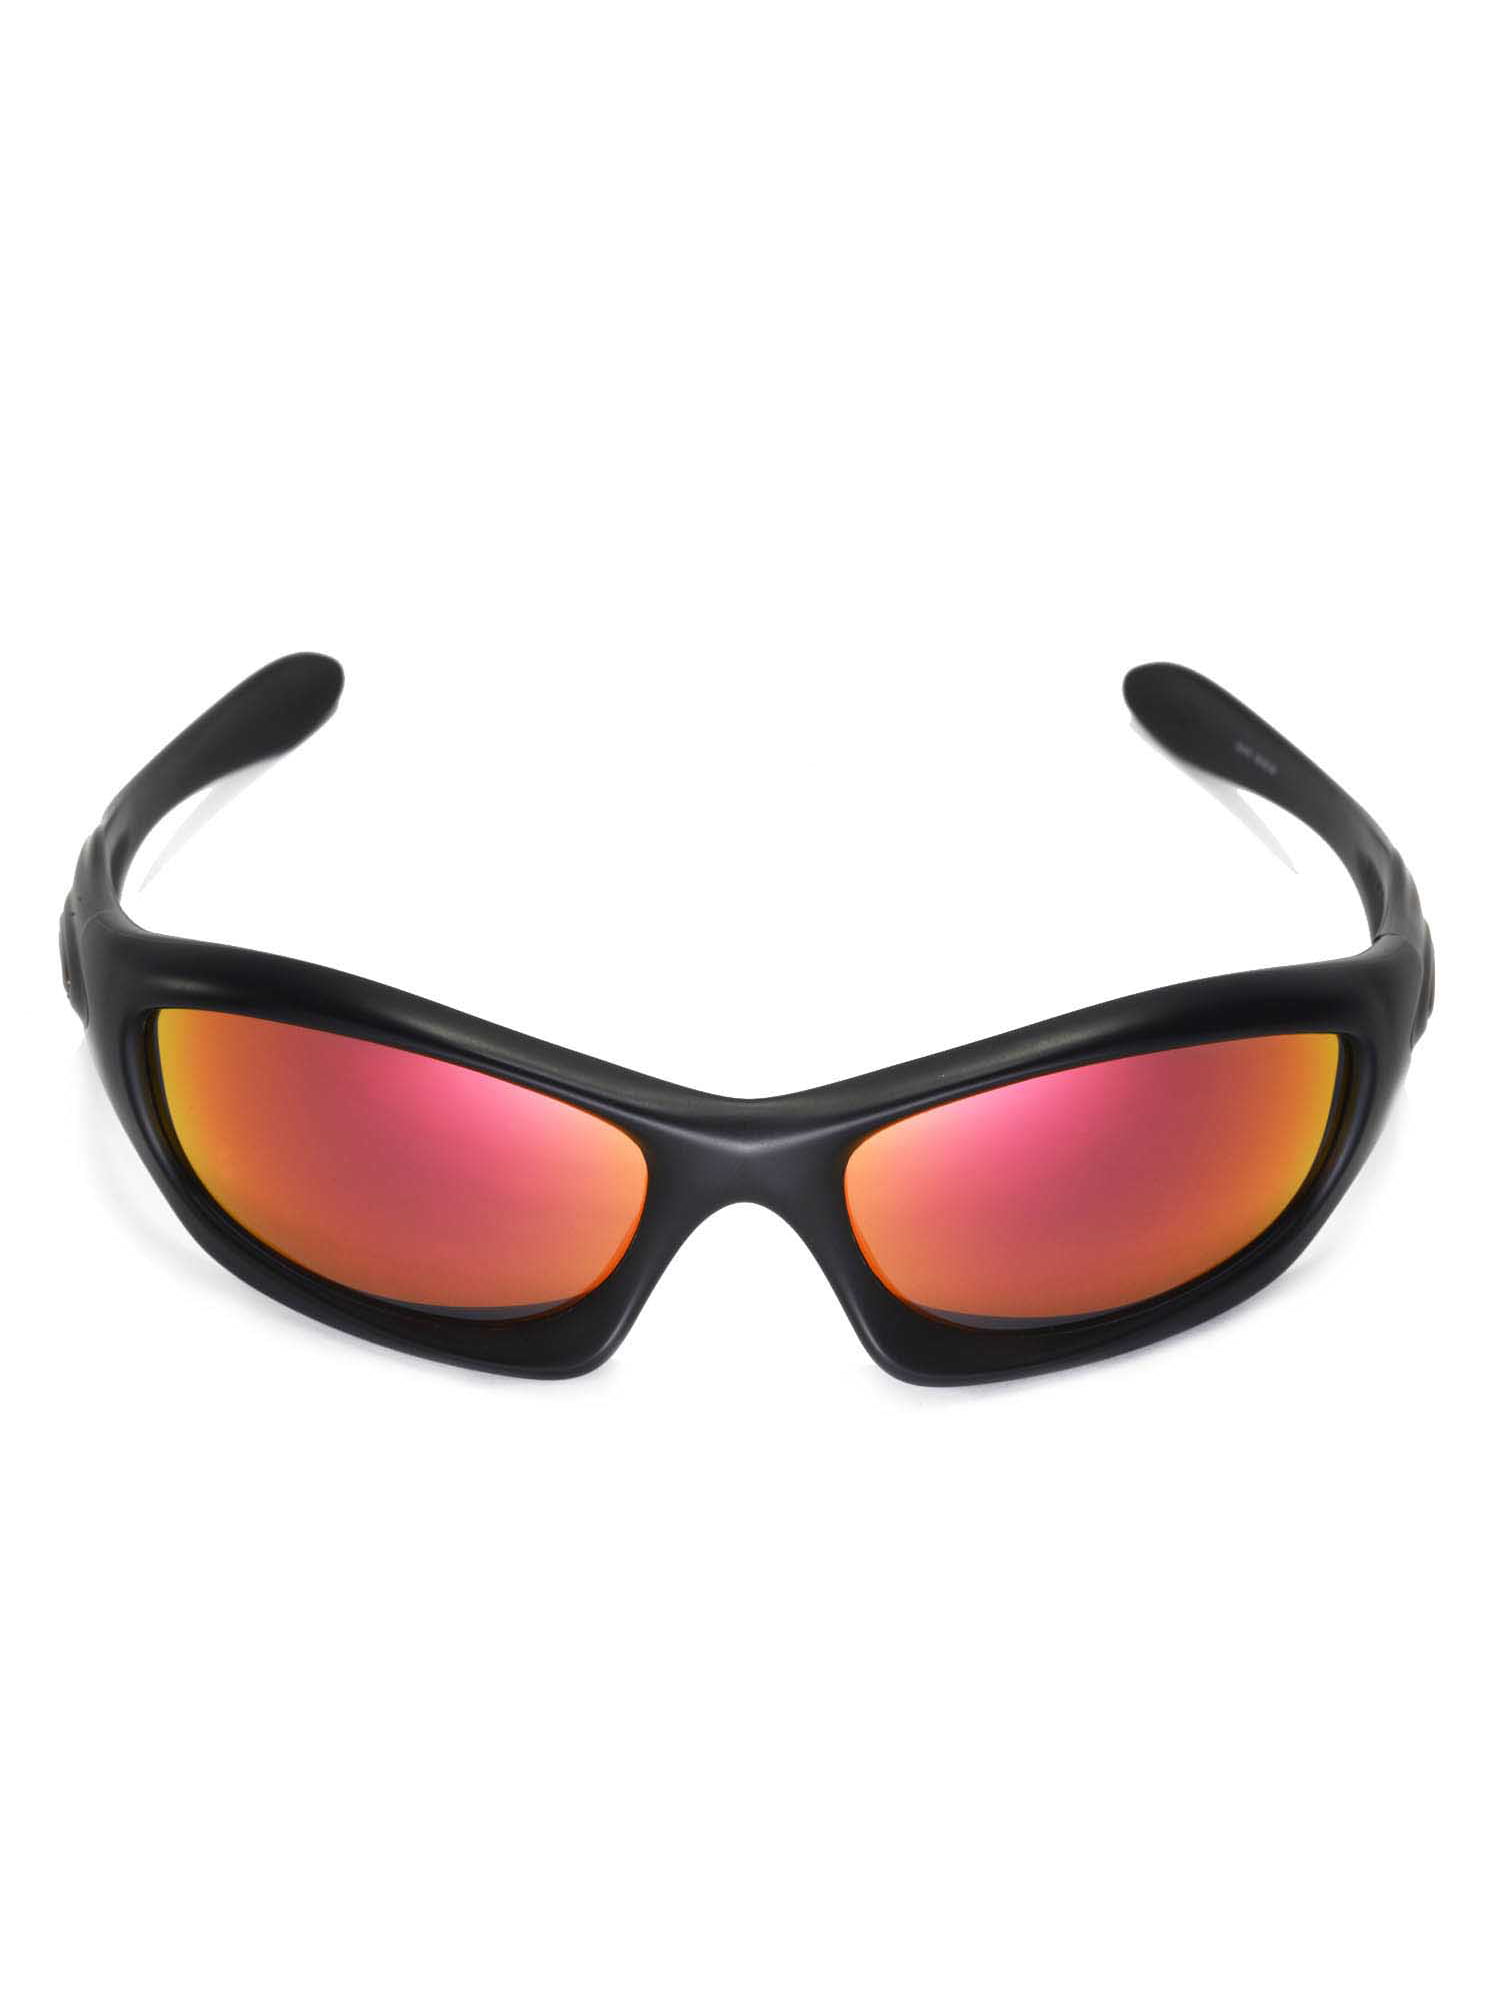 New Peter Storm Men’s Wayfarer Sunglasses 